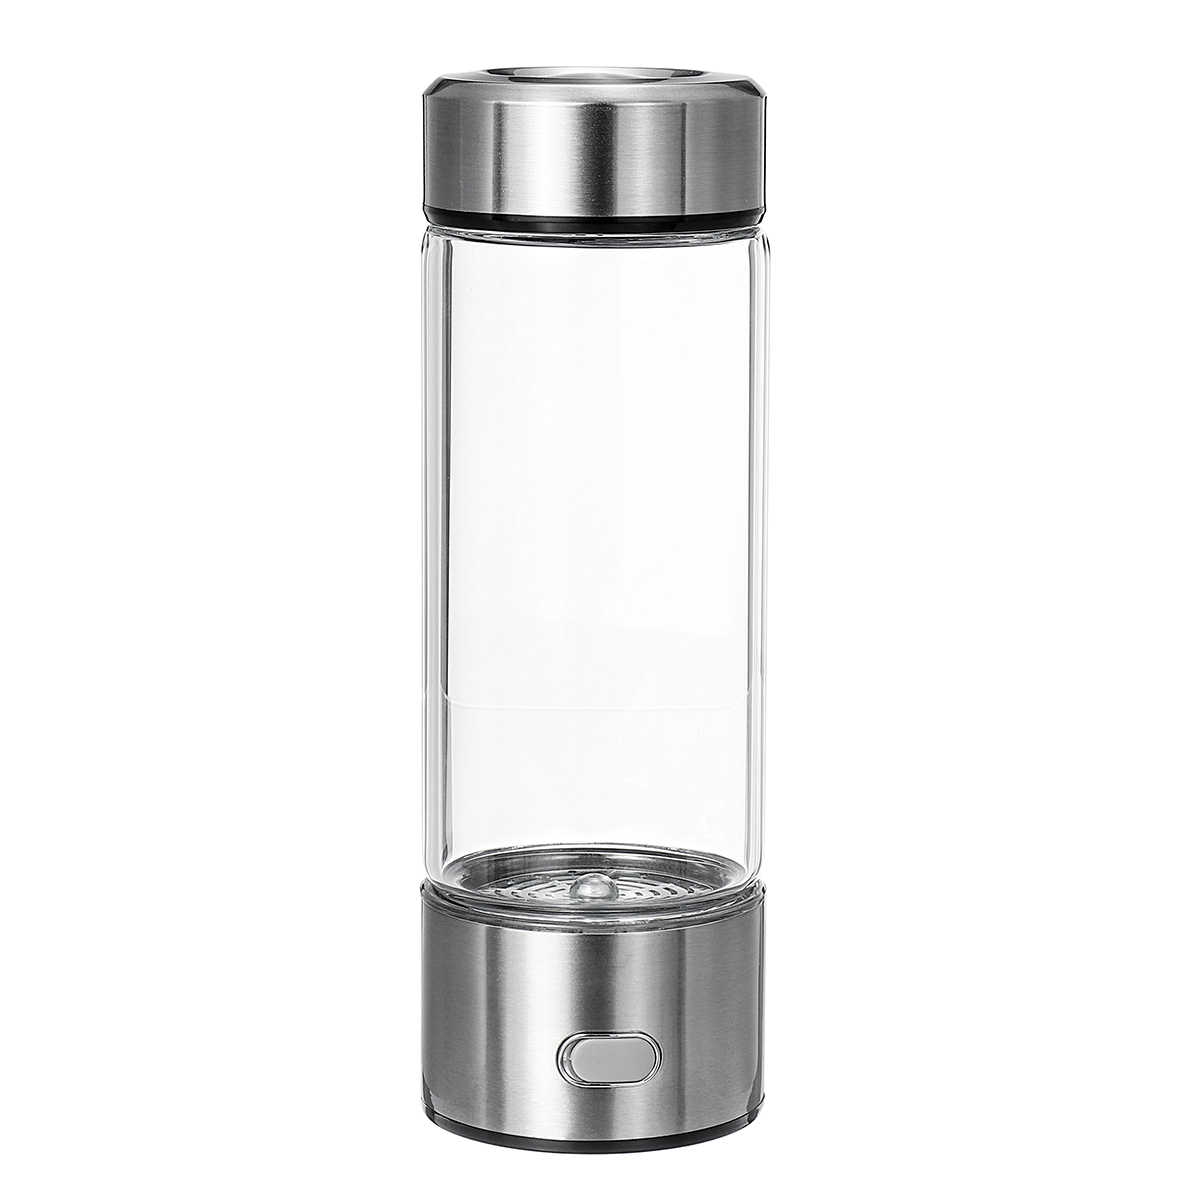 IPReereg-420ml-Titanium-Hydrogen-Rich-Water-Bottle-USB-Ionizer-Antioxidants-Maker-Drining-Cup-1564062-11